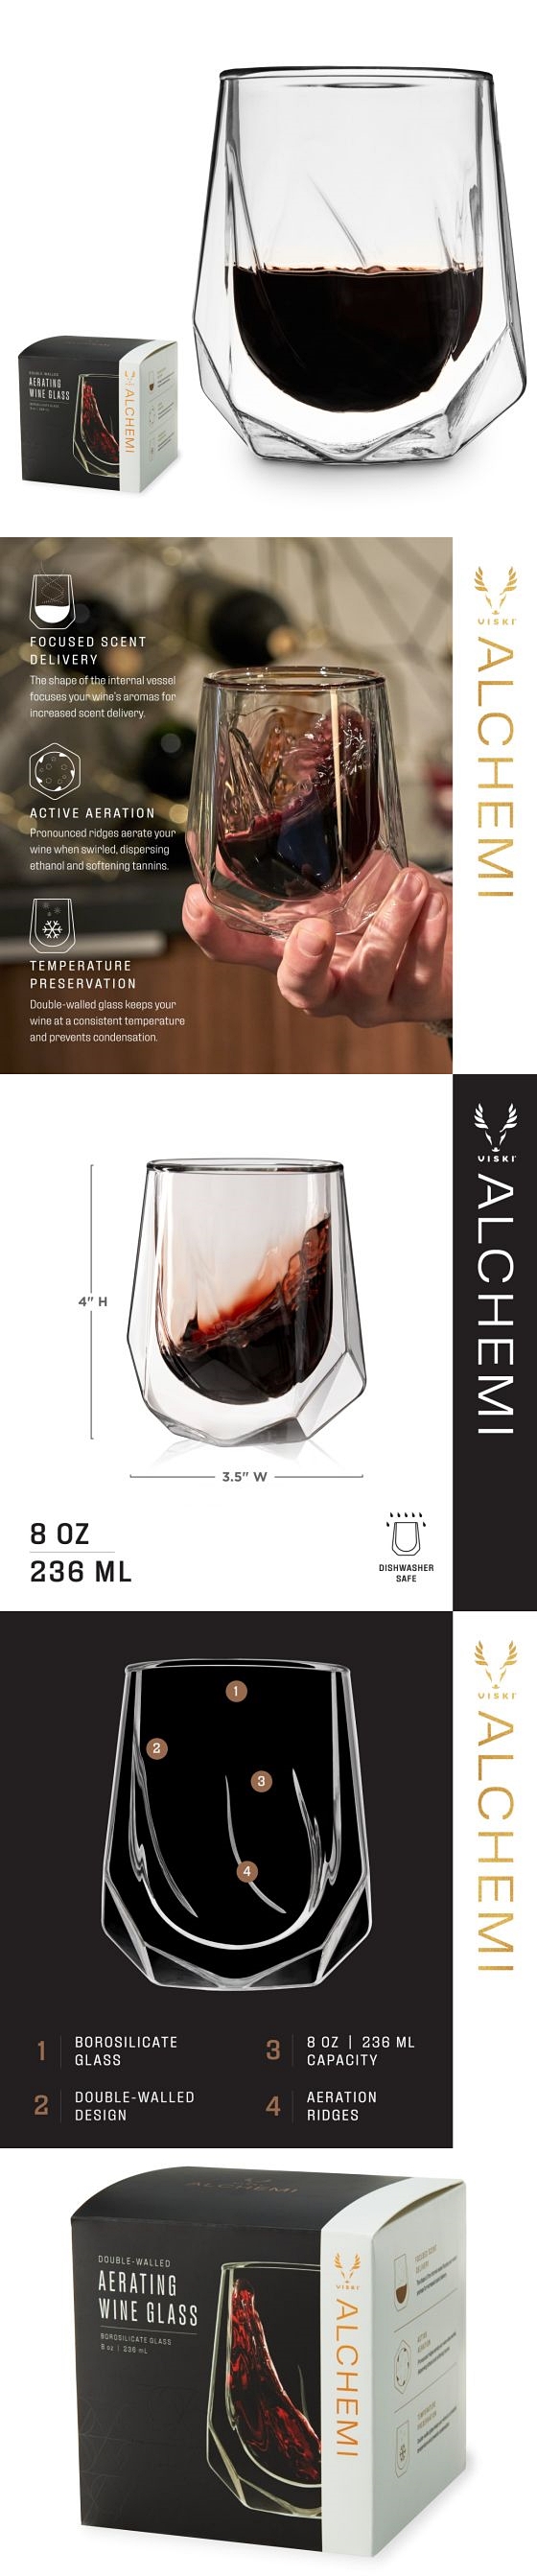 Alchemi Double-Walled Aerating Wine Tasting Glass by VISKI